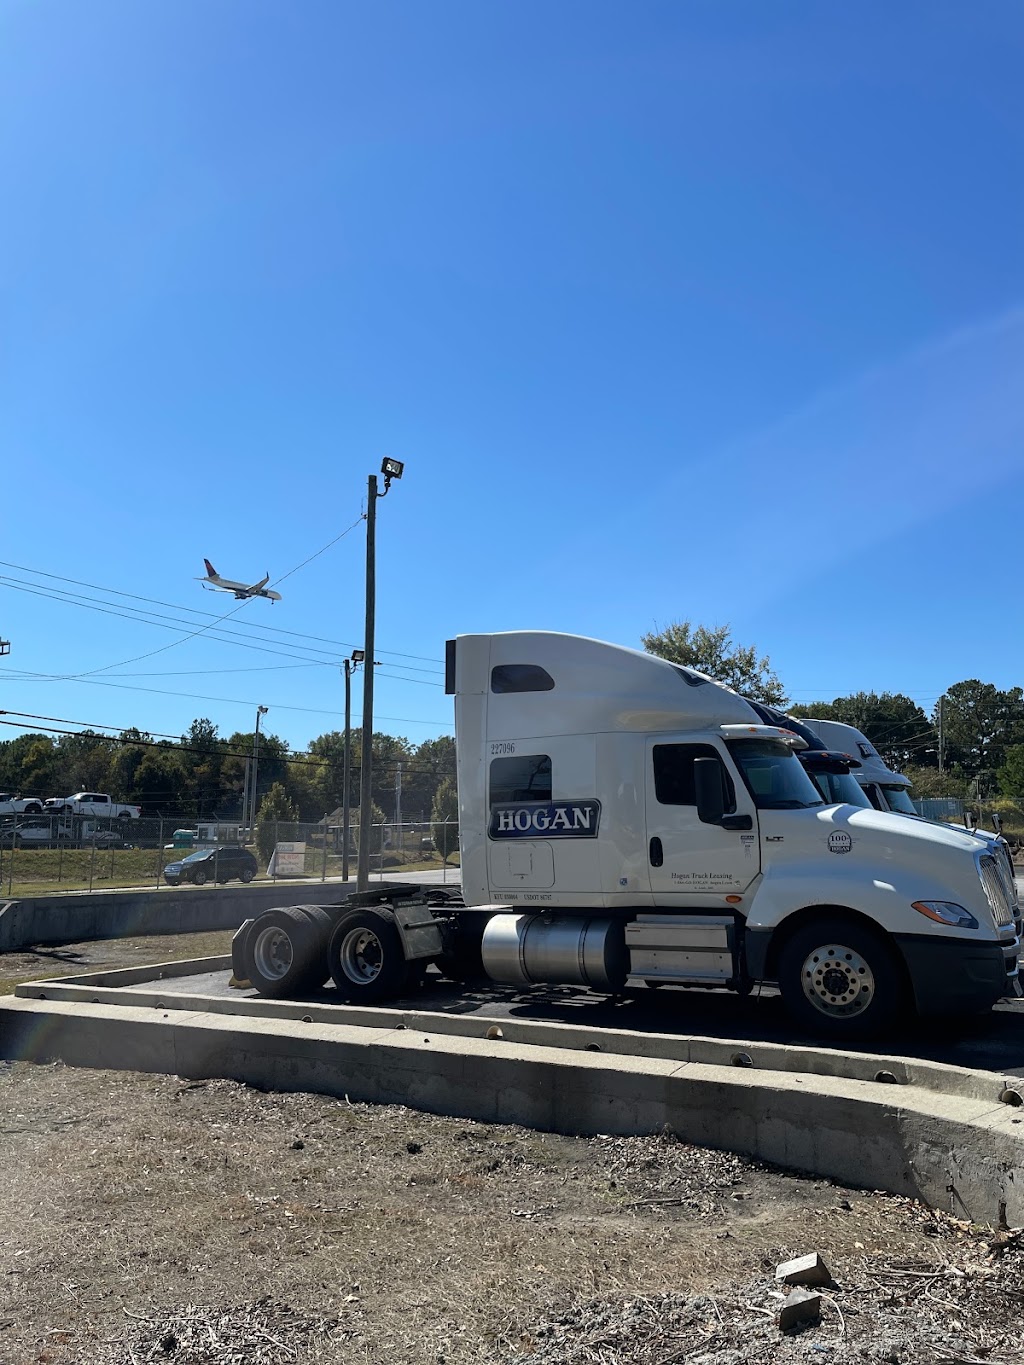 Hogan Truck Leasing & Rental: Atlanta, GA | 54 Southside Industrial Pkwy, Atlanta, GA 30354, USA | Phone: (678) 723-1500